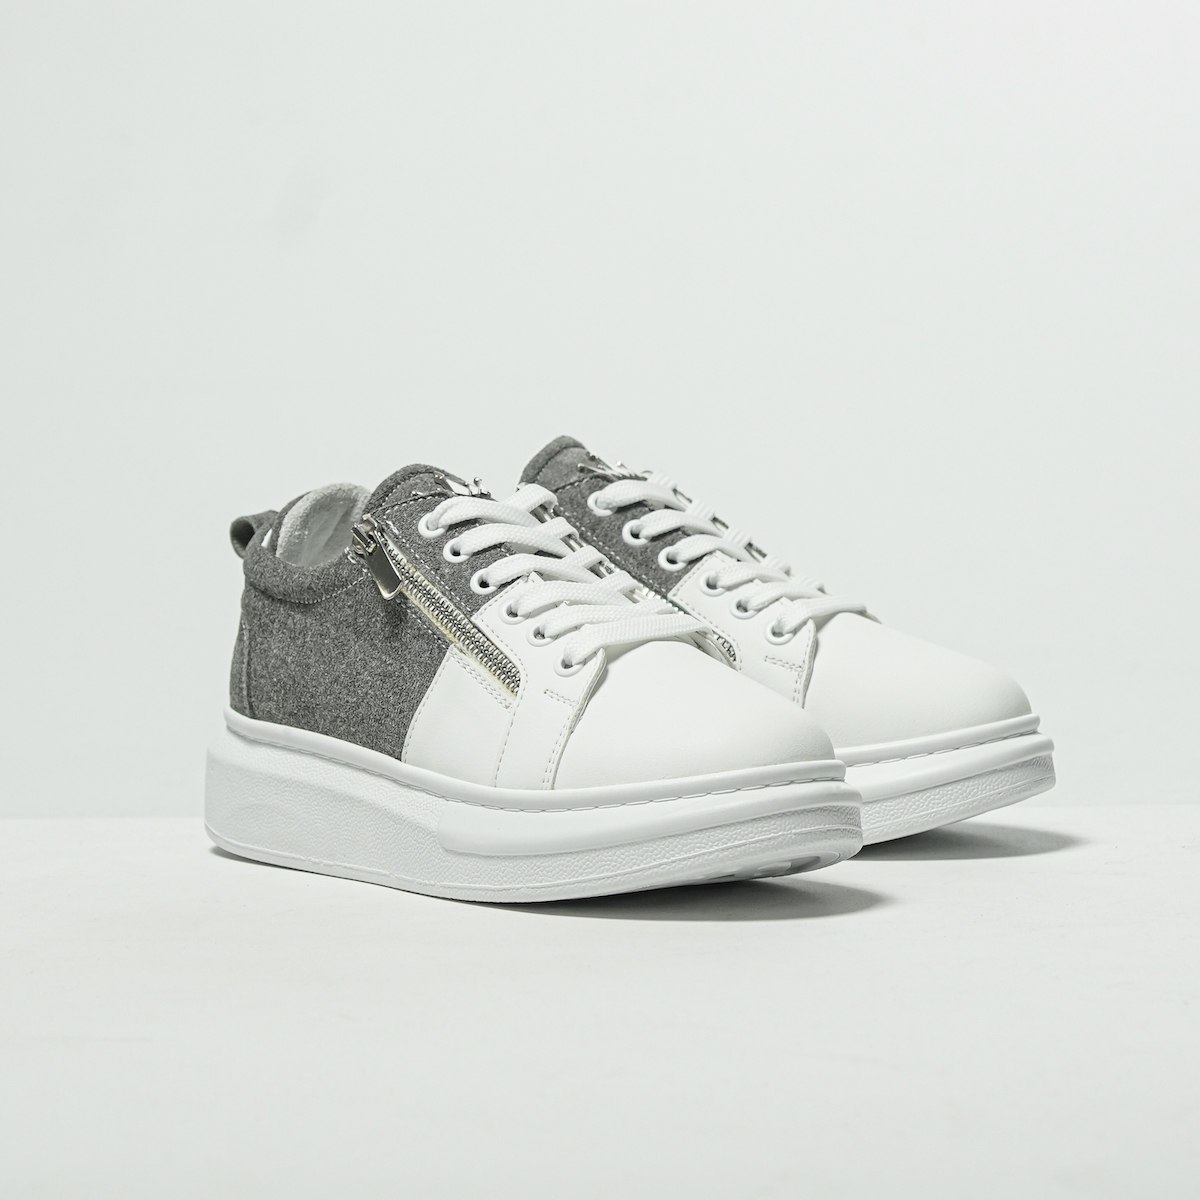 Hype Sole Zipped Style Sneakers in Nubuck Grey-White | Martin Valen